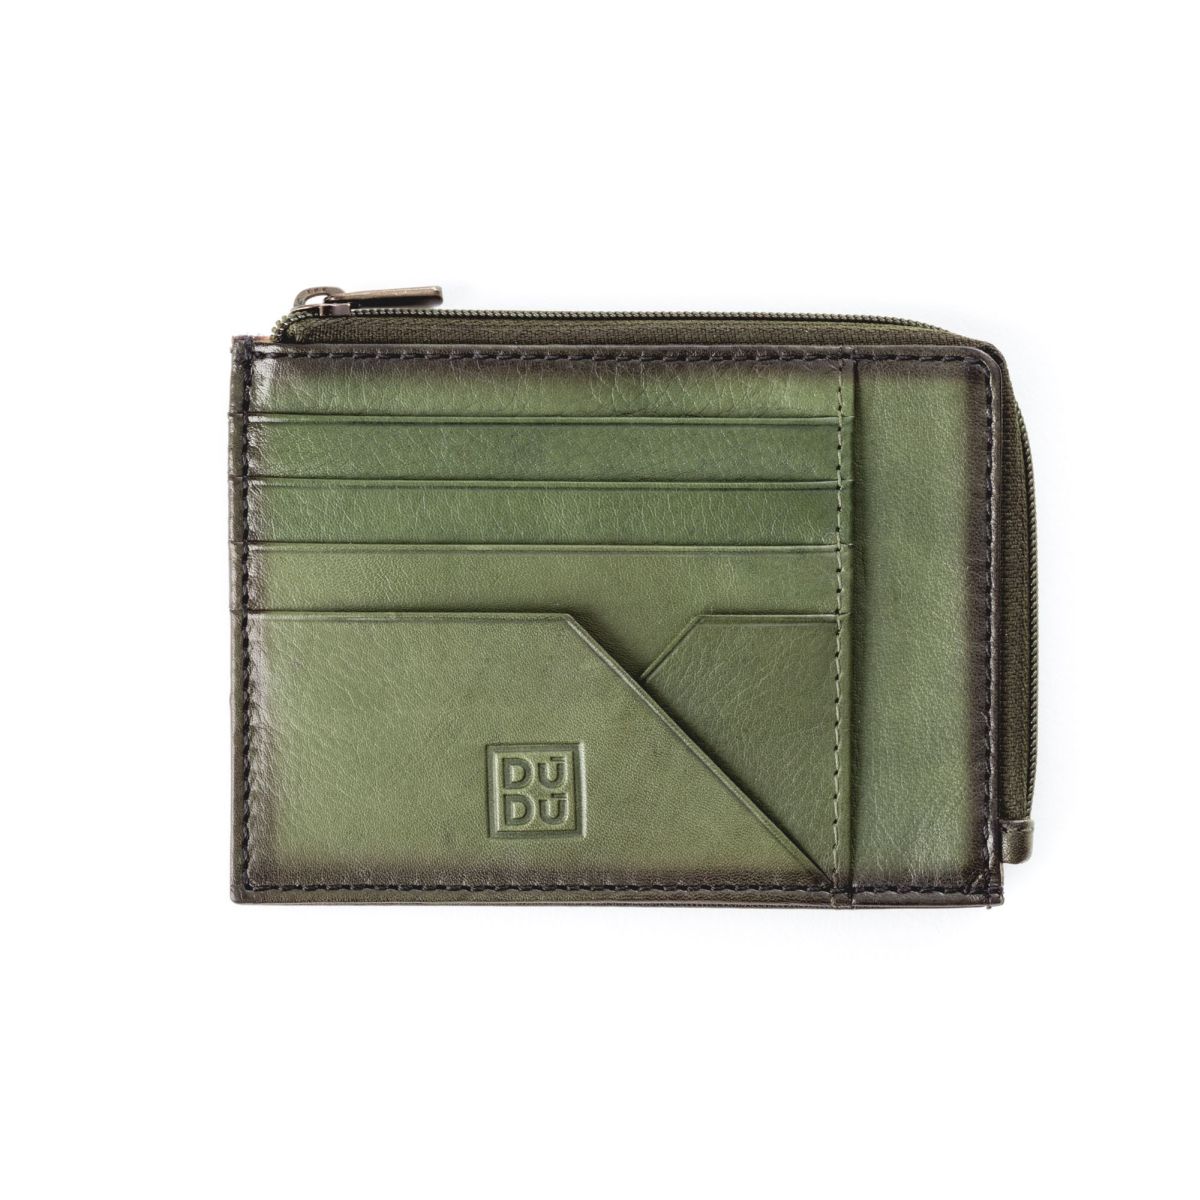 DuDu Flat Leather Wallet - Green